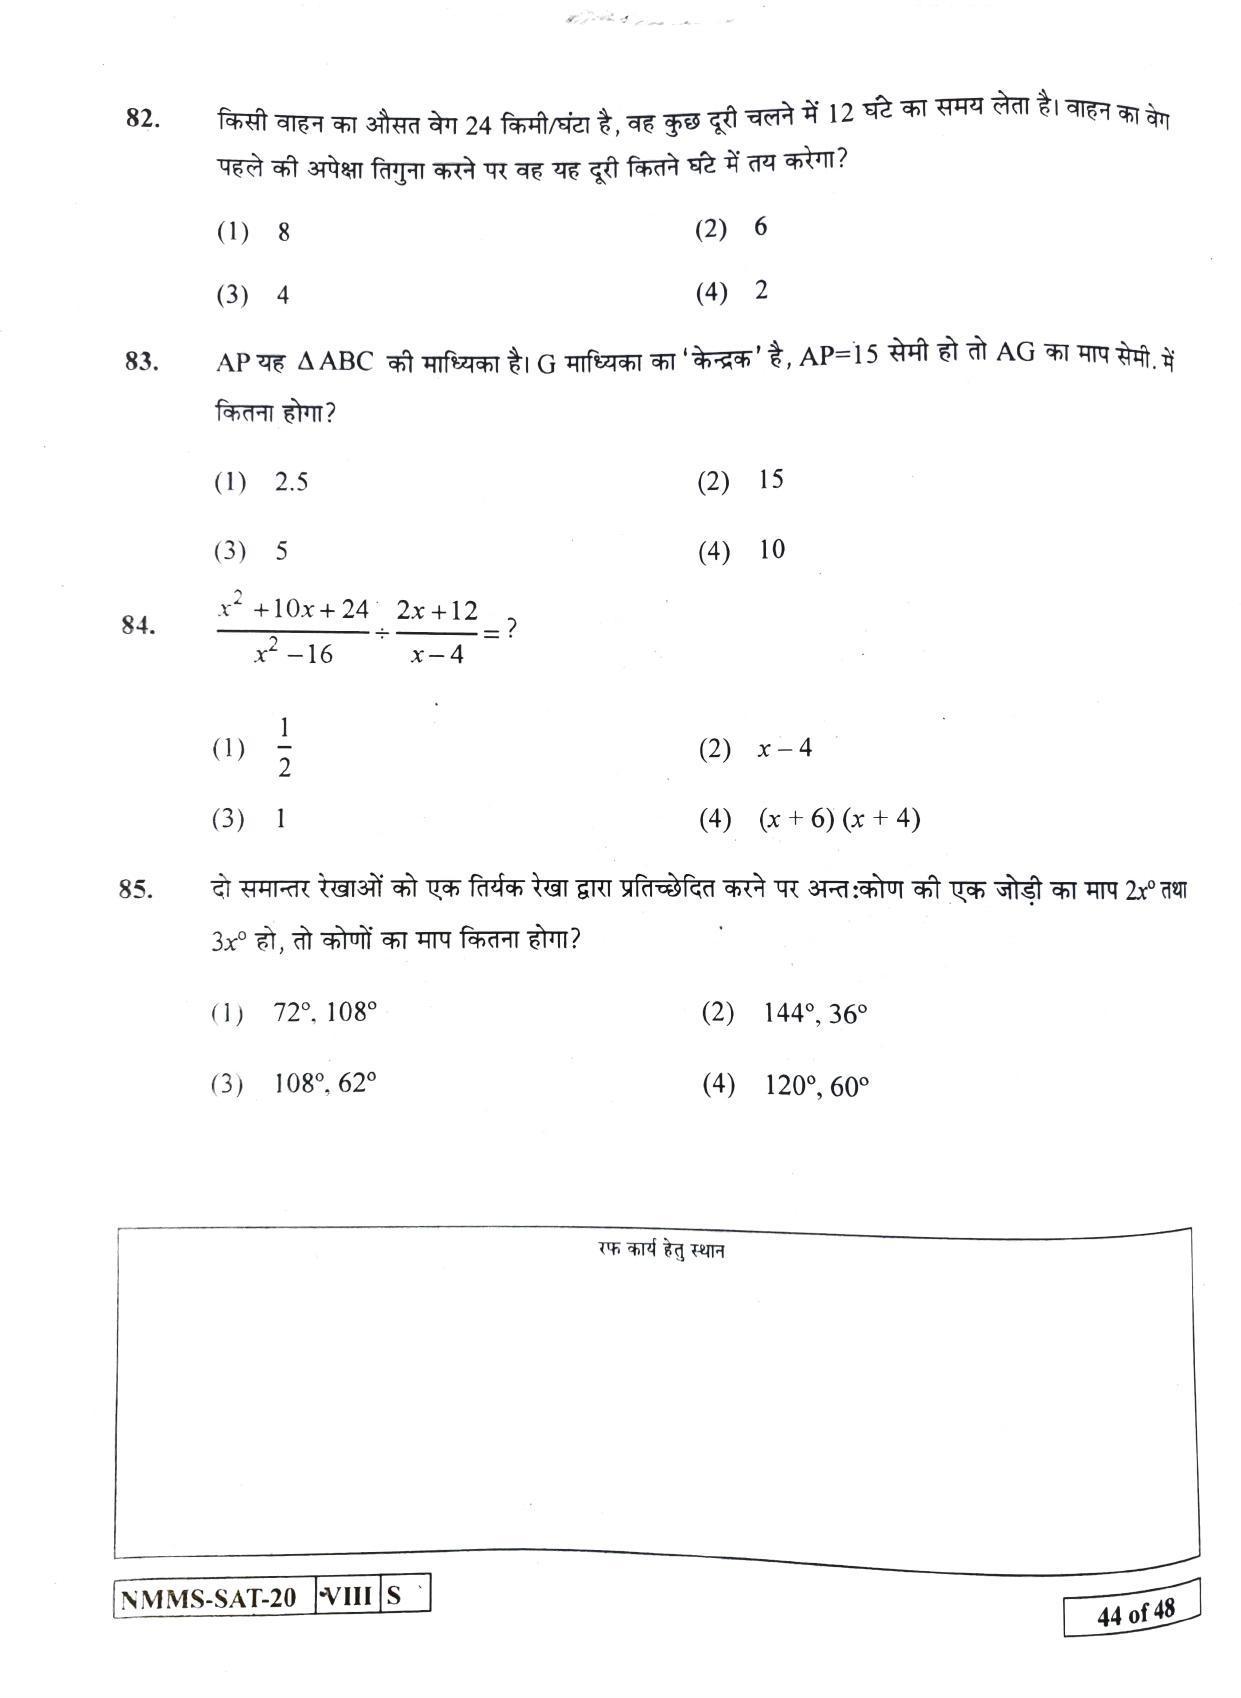 SAT HINDI 2020-21 Class 8 Maharashtra NMMS Question Papers - Page 44